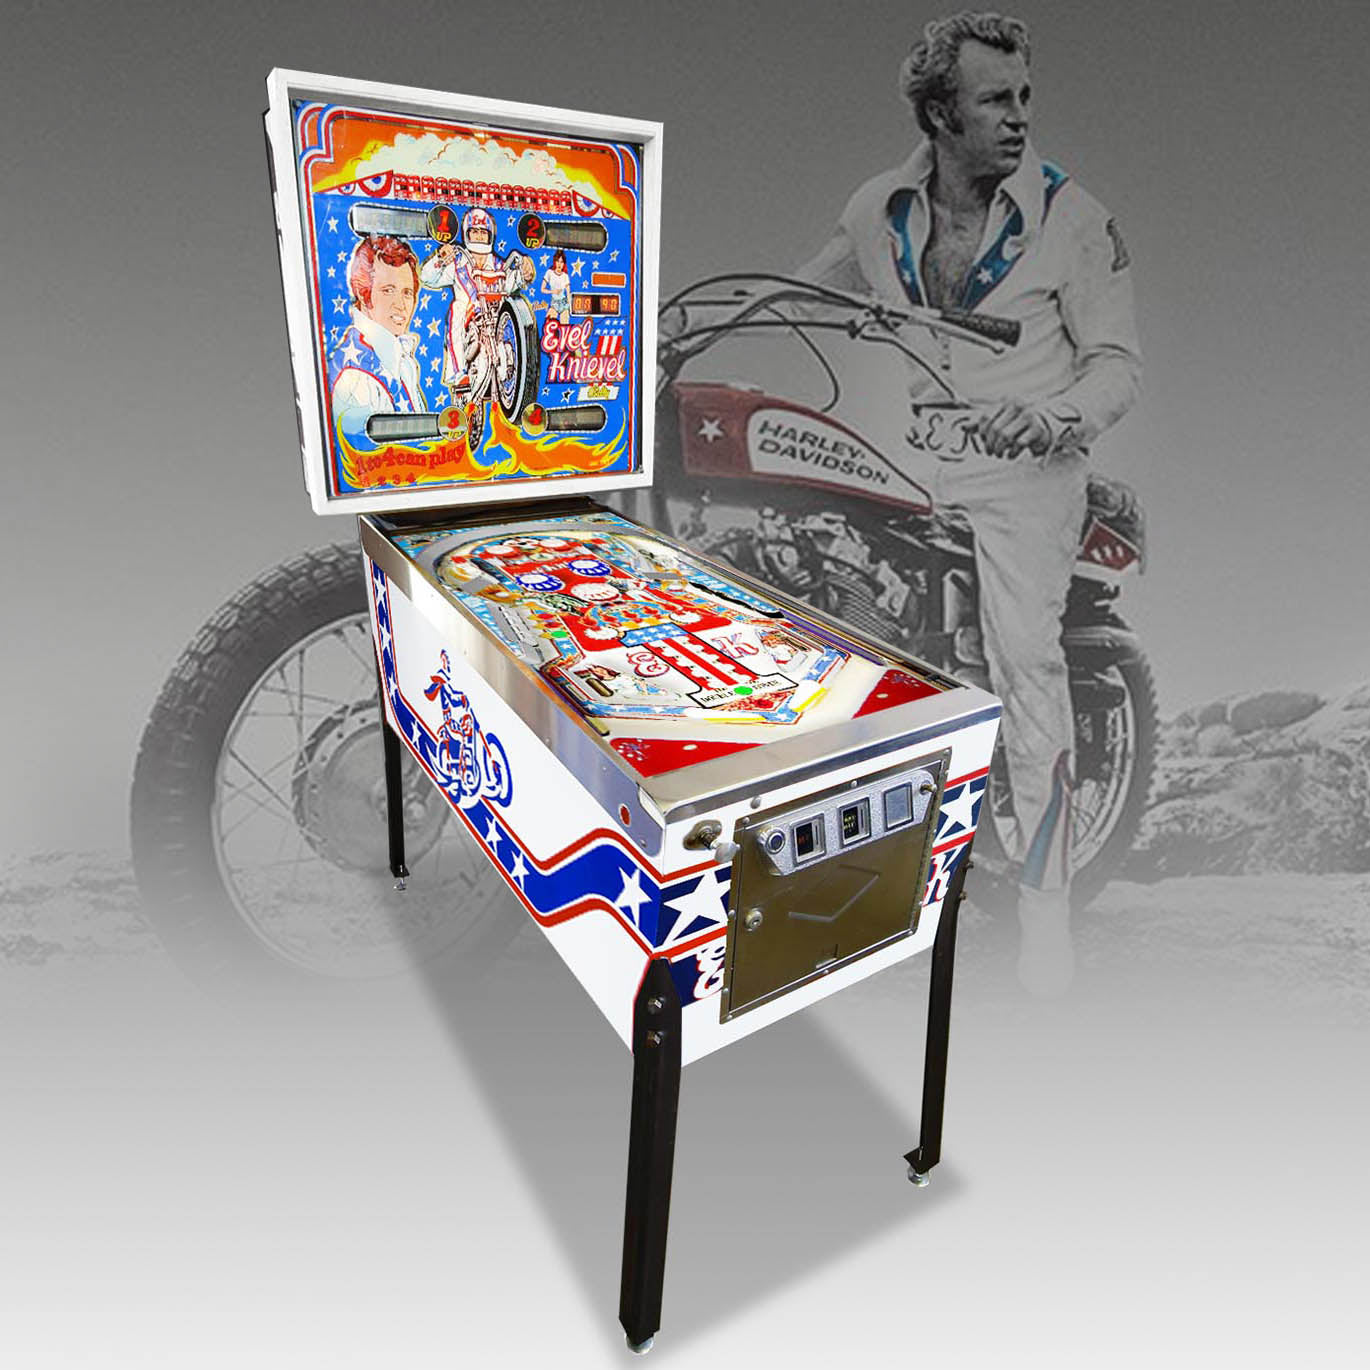 1977 Evel Knievel Pinball Machine by Bally